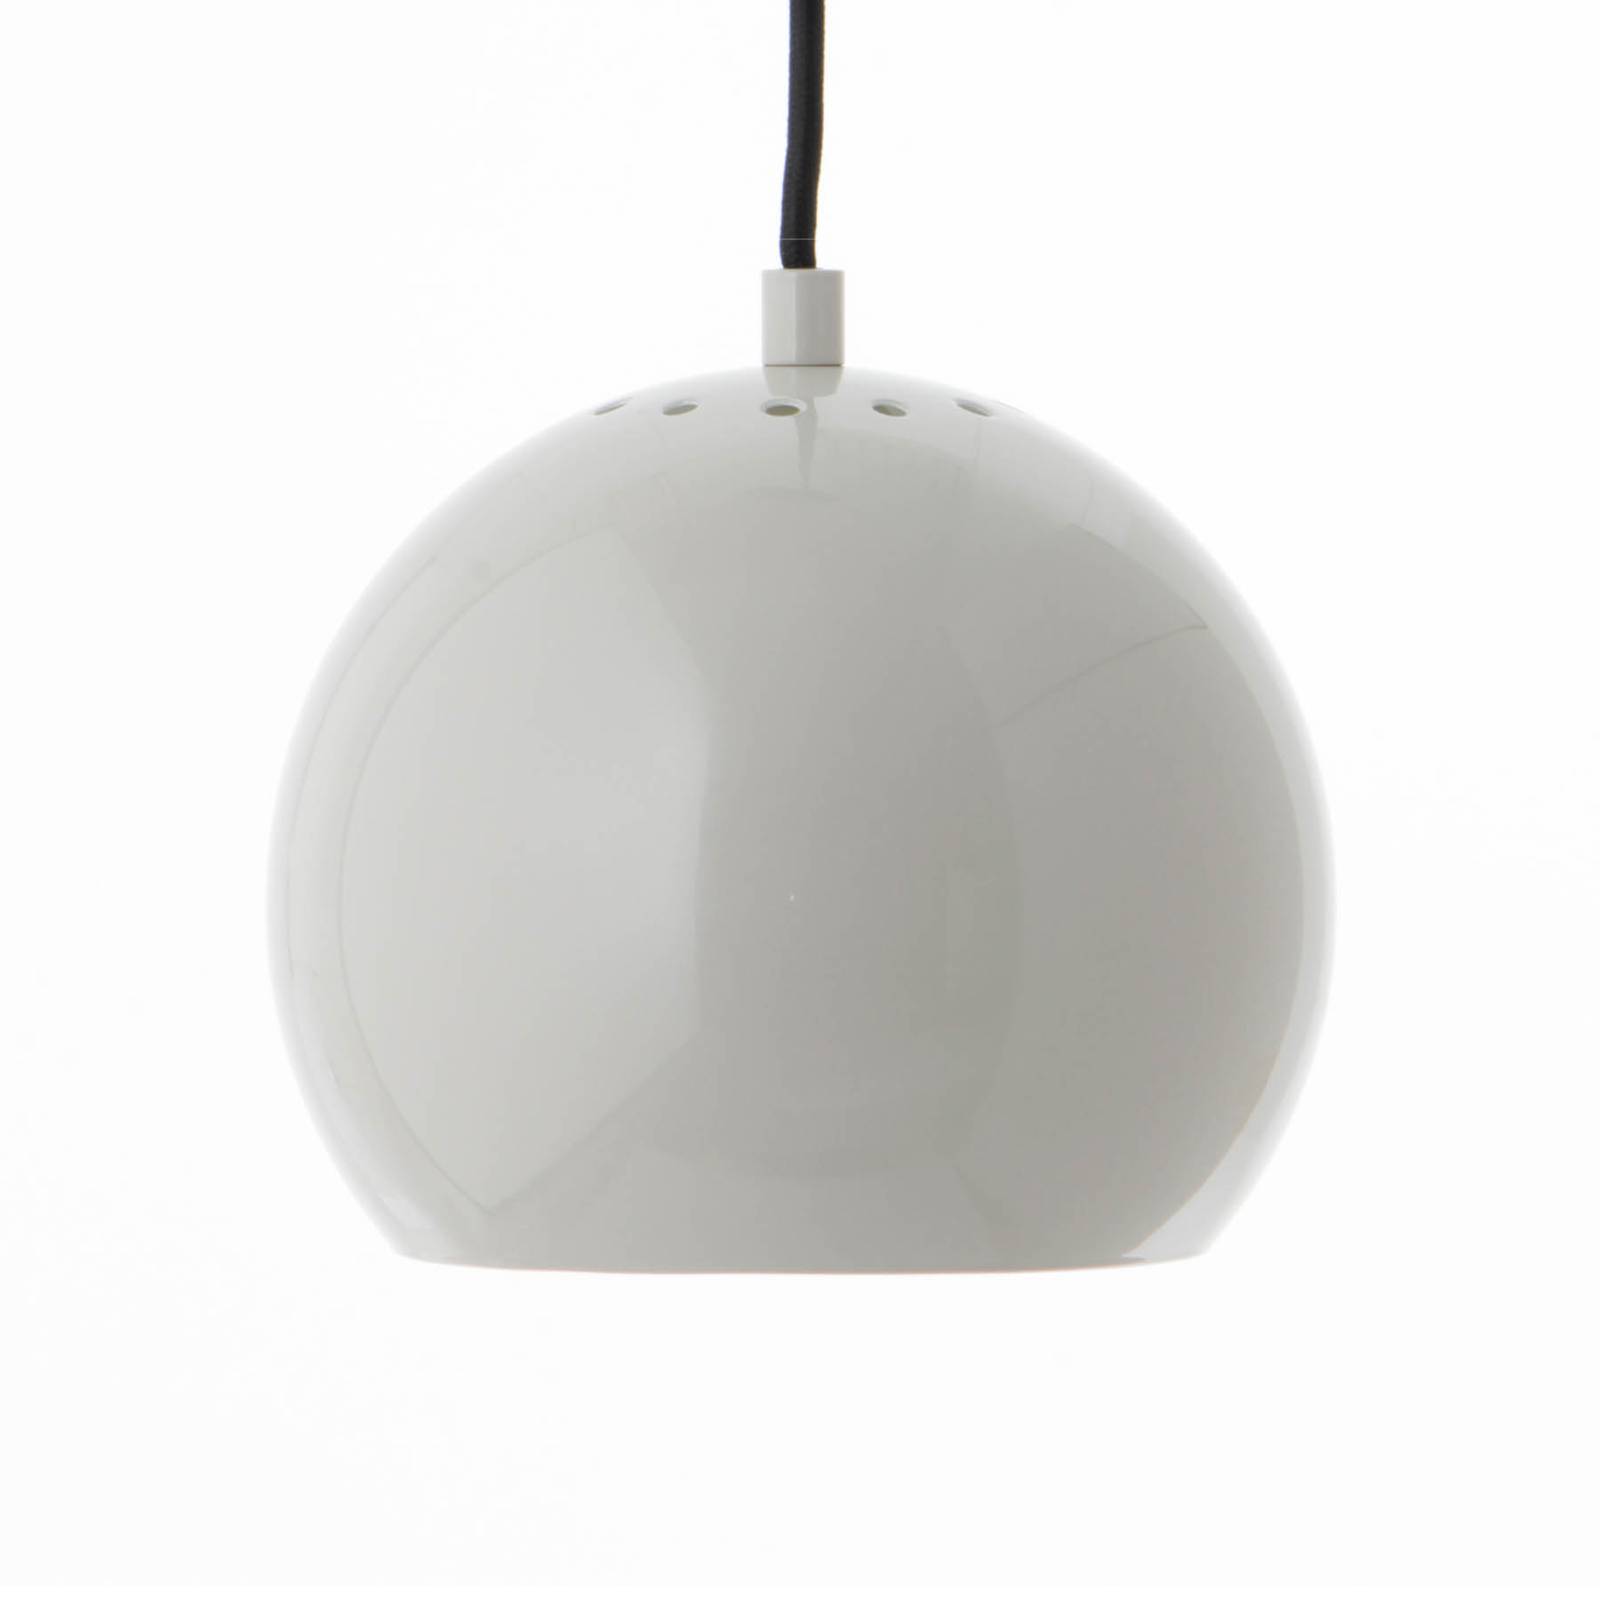 Image of Lampada a sospensione FRANDSEN Ball, grigio chiaro lucido, Ø 18 cm